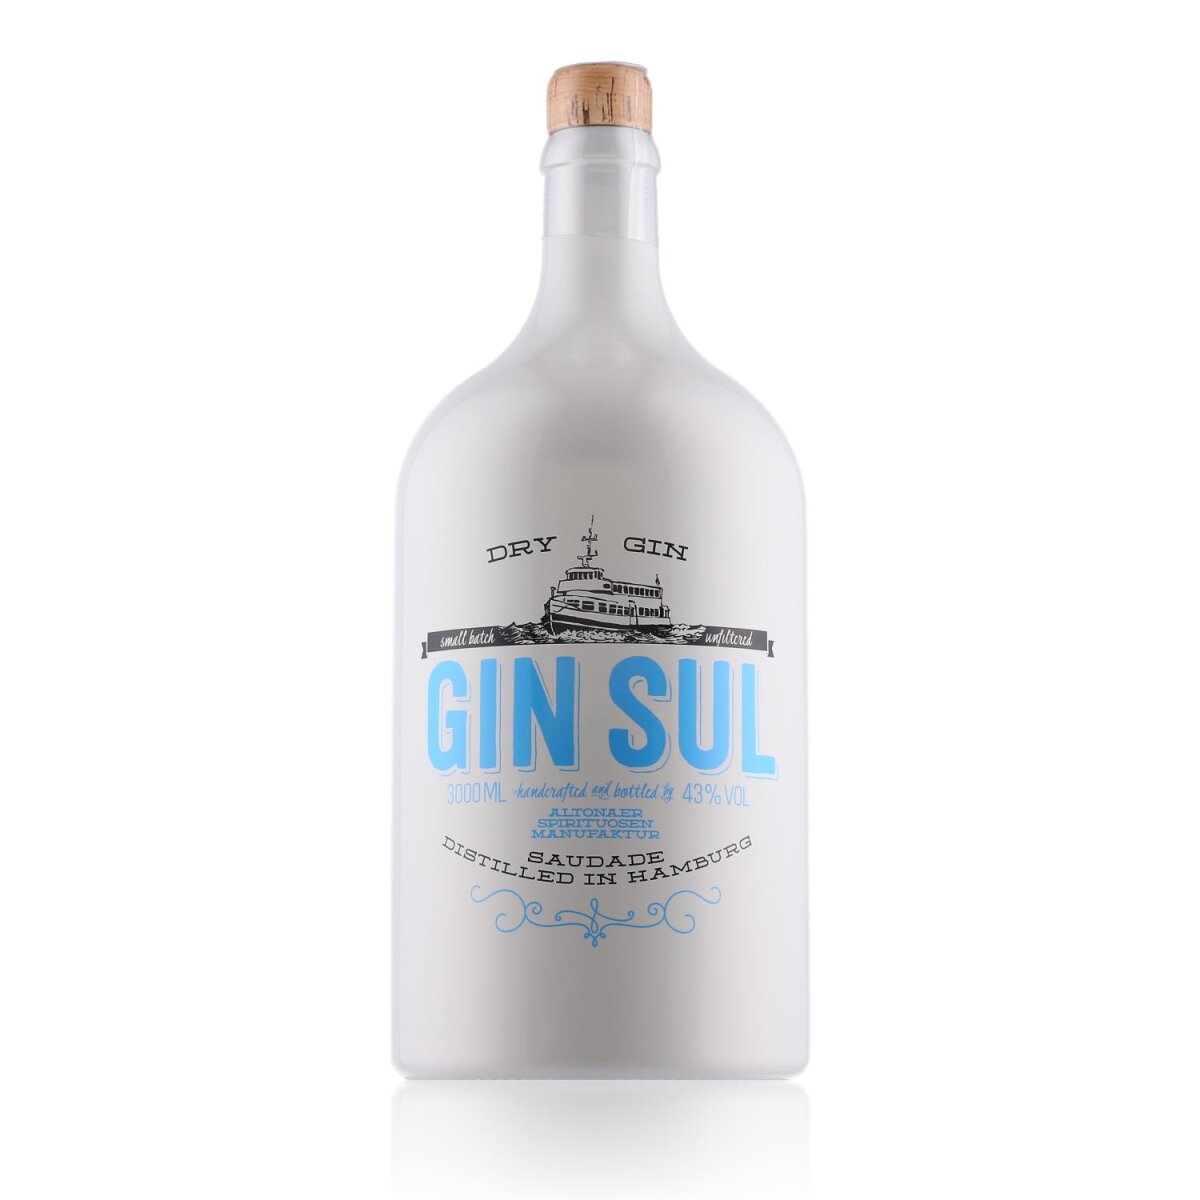 Gin Sul Dry € Gin 43% Vol. 211,19 3l